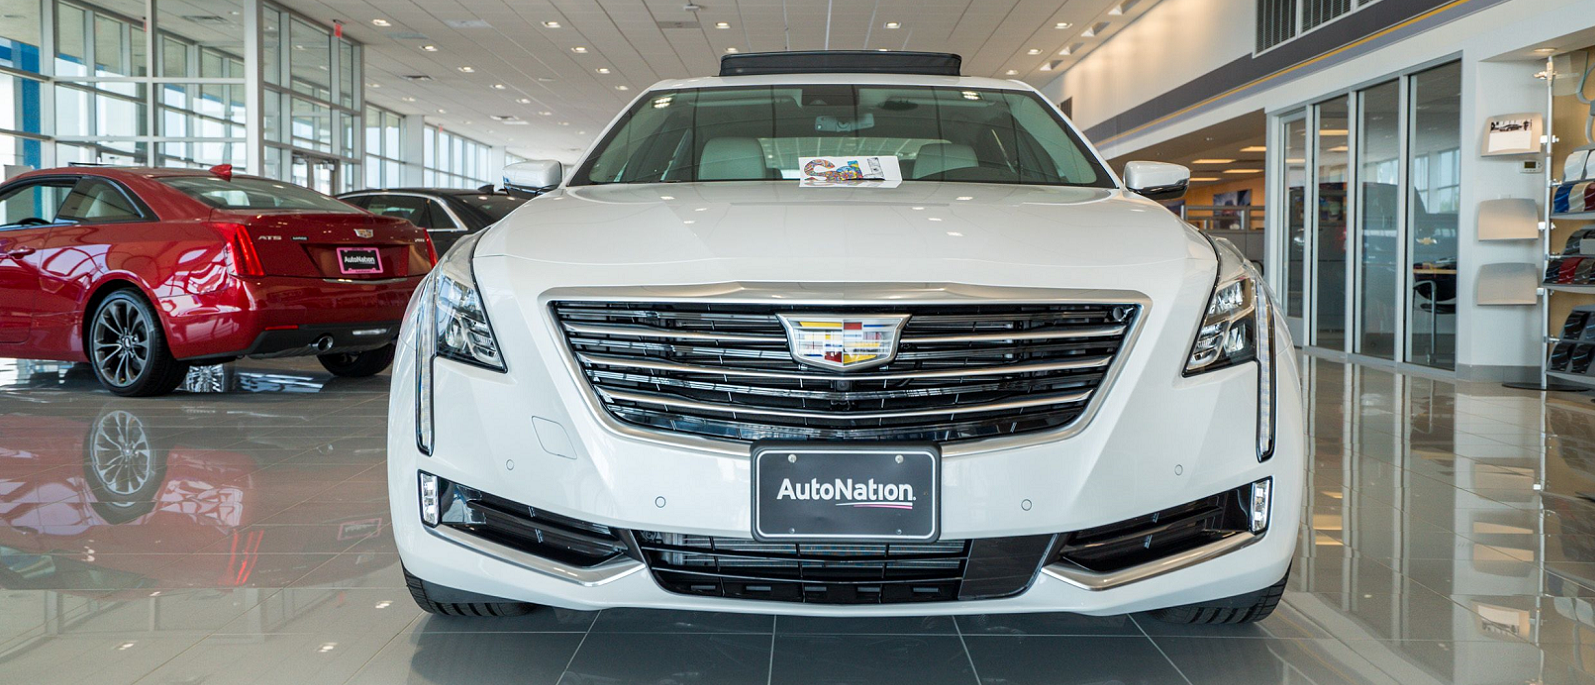 About AutoNation Cadillac West Amarillo